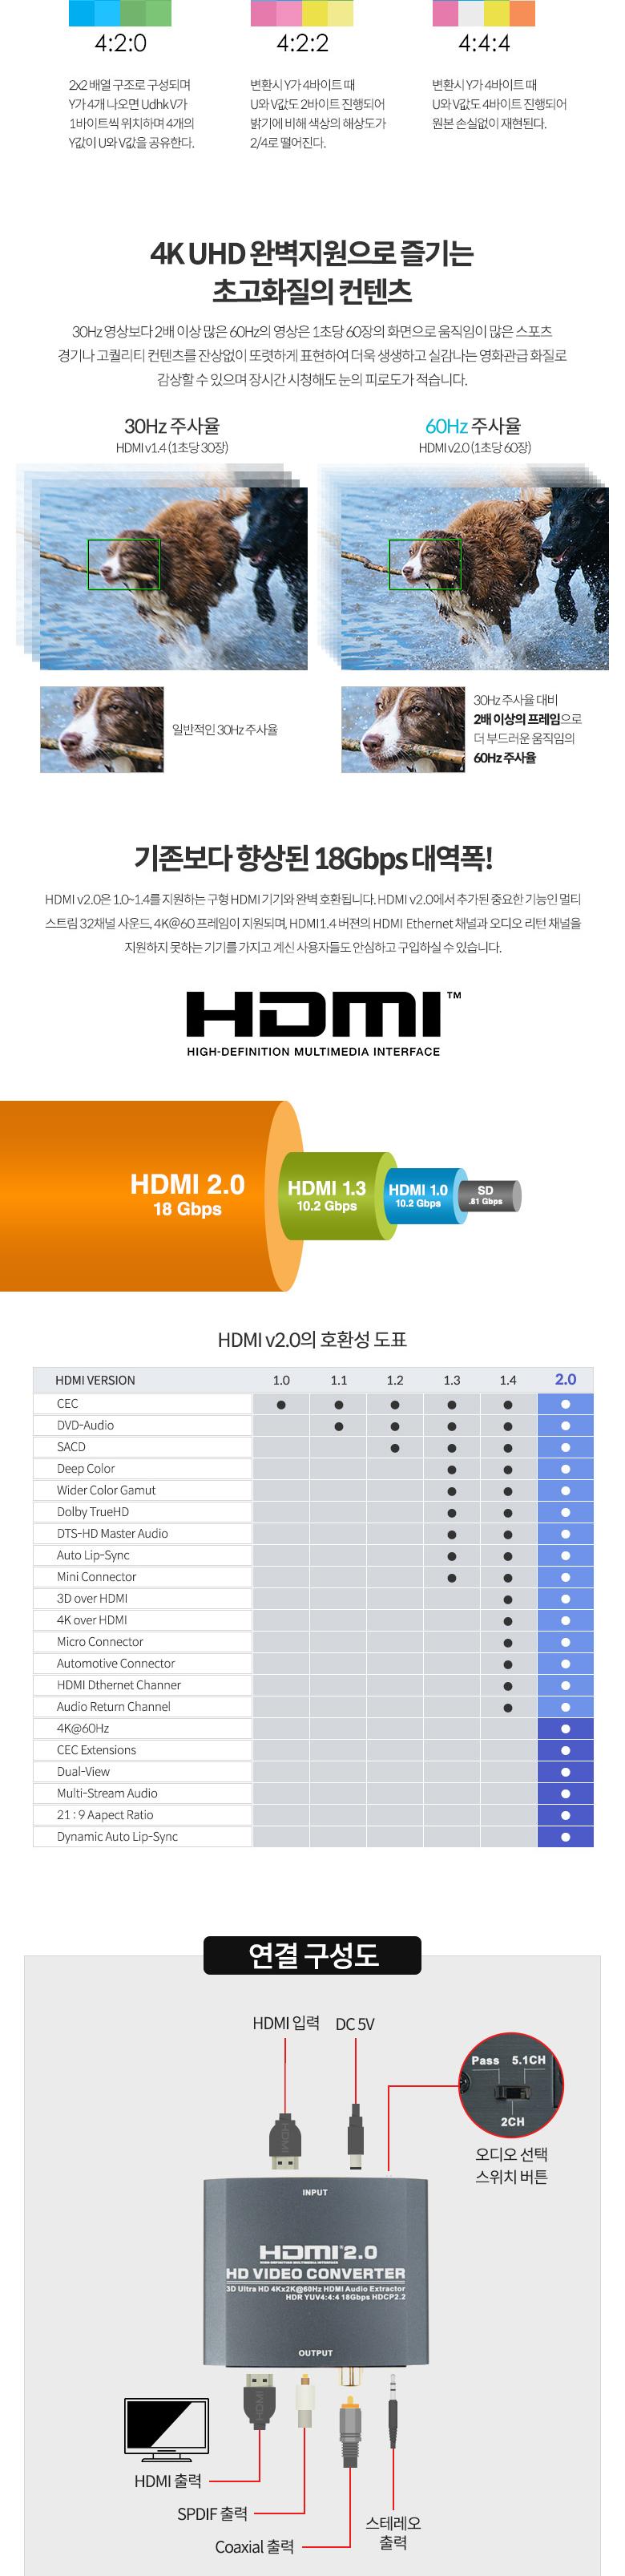 Coms HDMI 2.0  . HDMI to HDMI SPDIF Coaxial Audio. 4K2K 60Hz. Toslink. ׷ 3.5mm.   ȯ  ȯ HDMI HDMI HDMI HDMI  ȯ